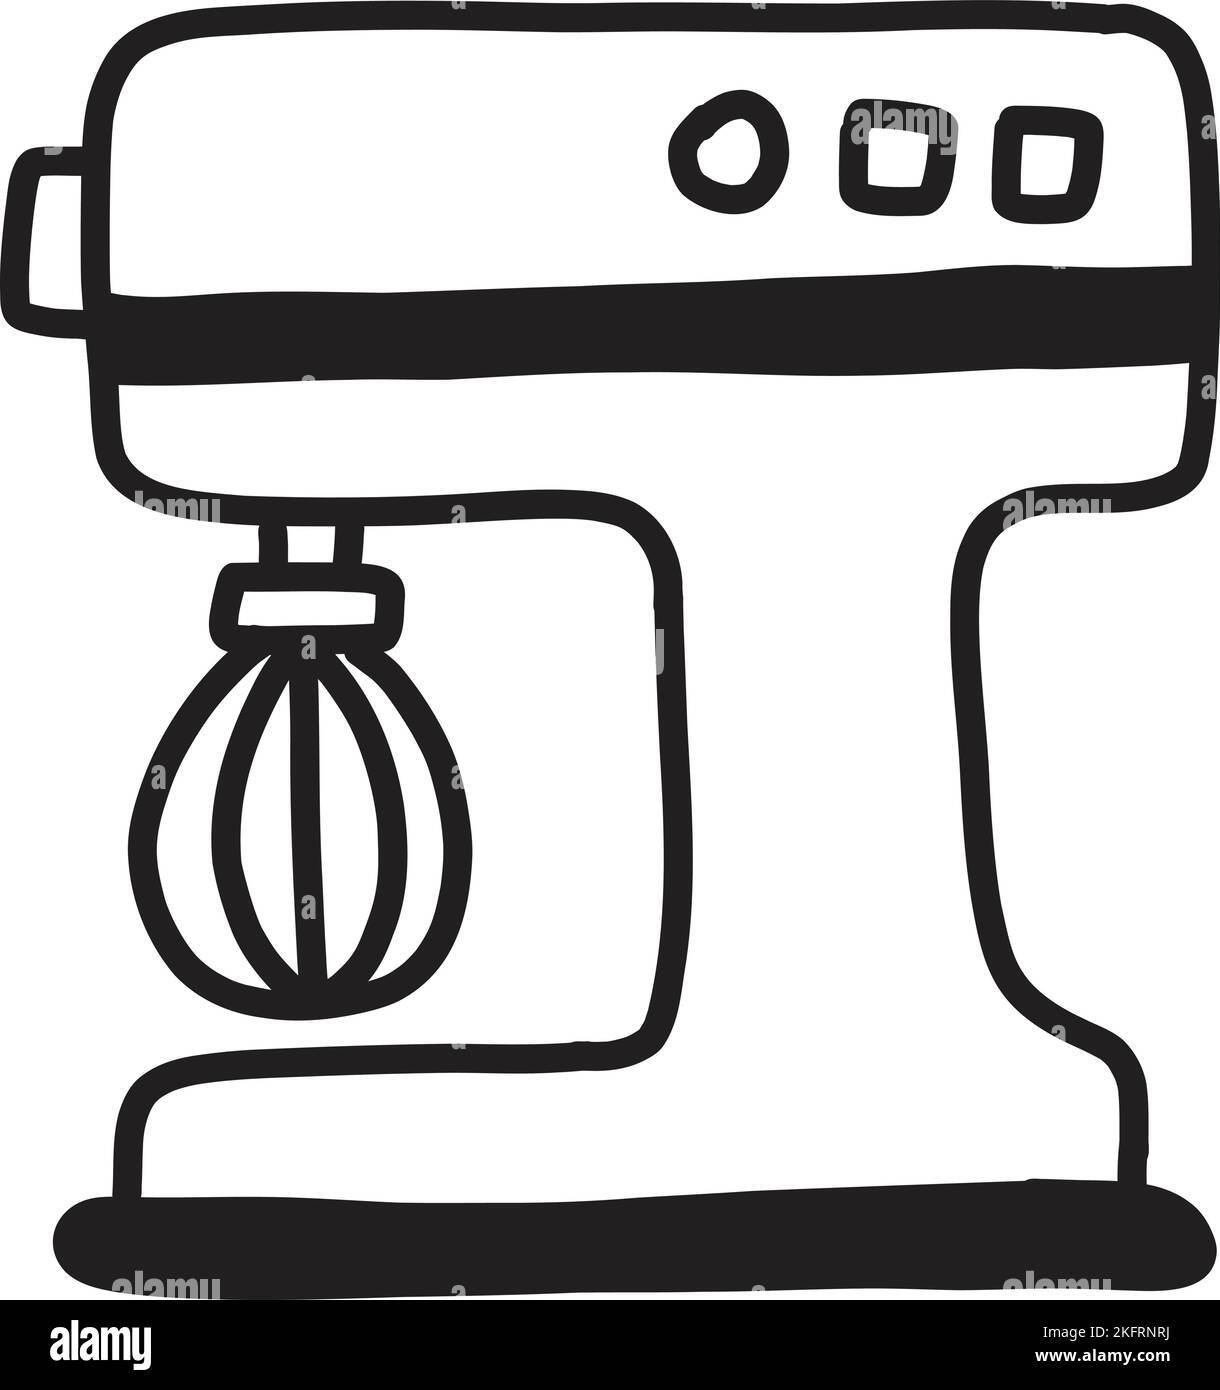 https://c8.alamy.com/comp/2KFRNRJ/hand-drawn-whisks-of-mixer-whip-cream-machine-illustration-isolated-on-background-2KFRNRJ.jpg